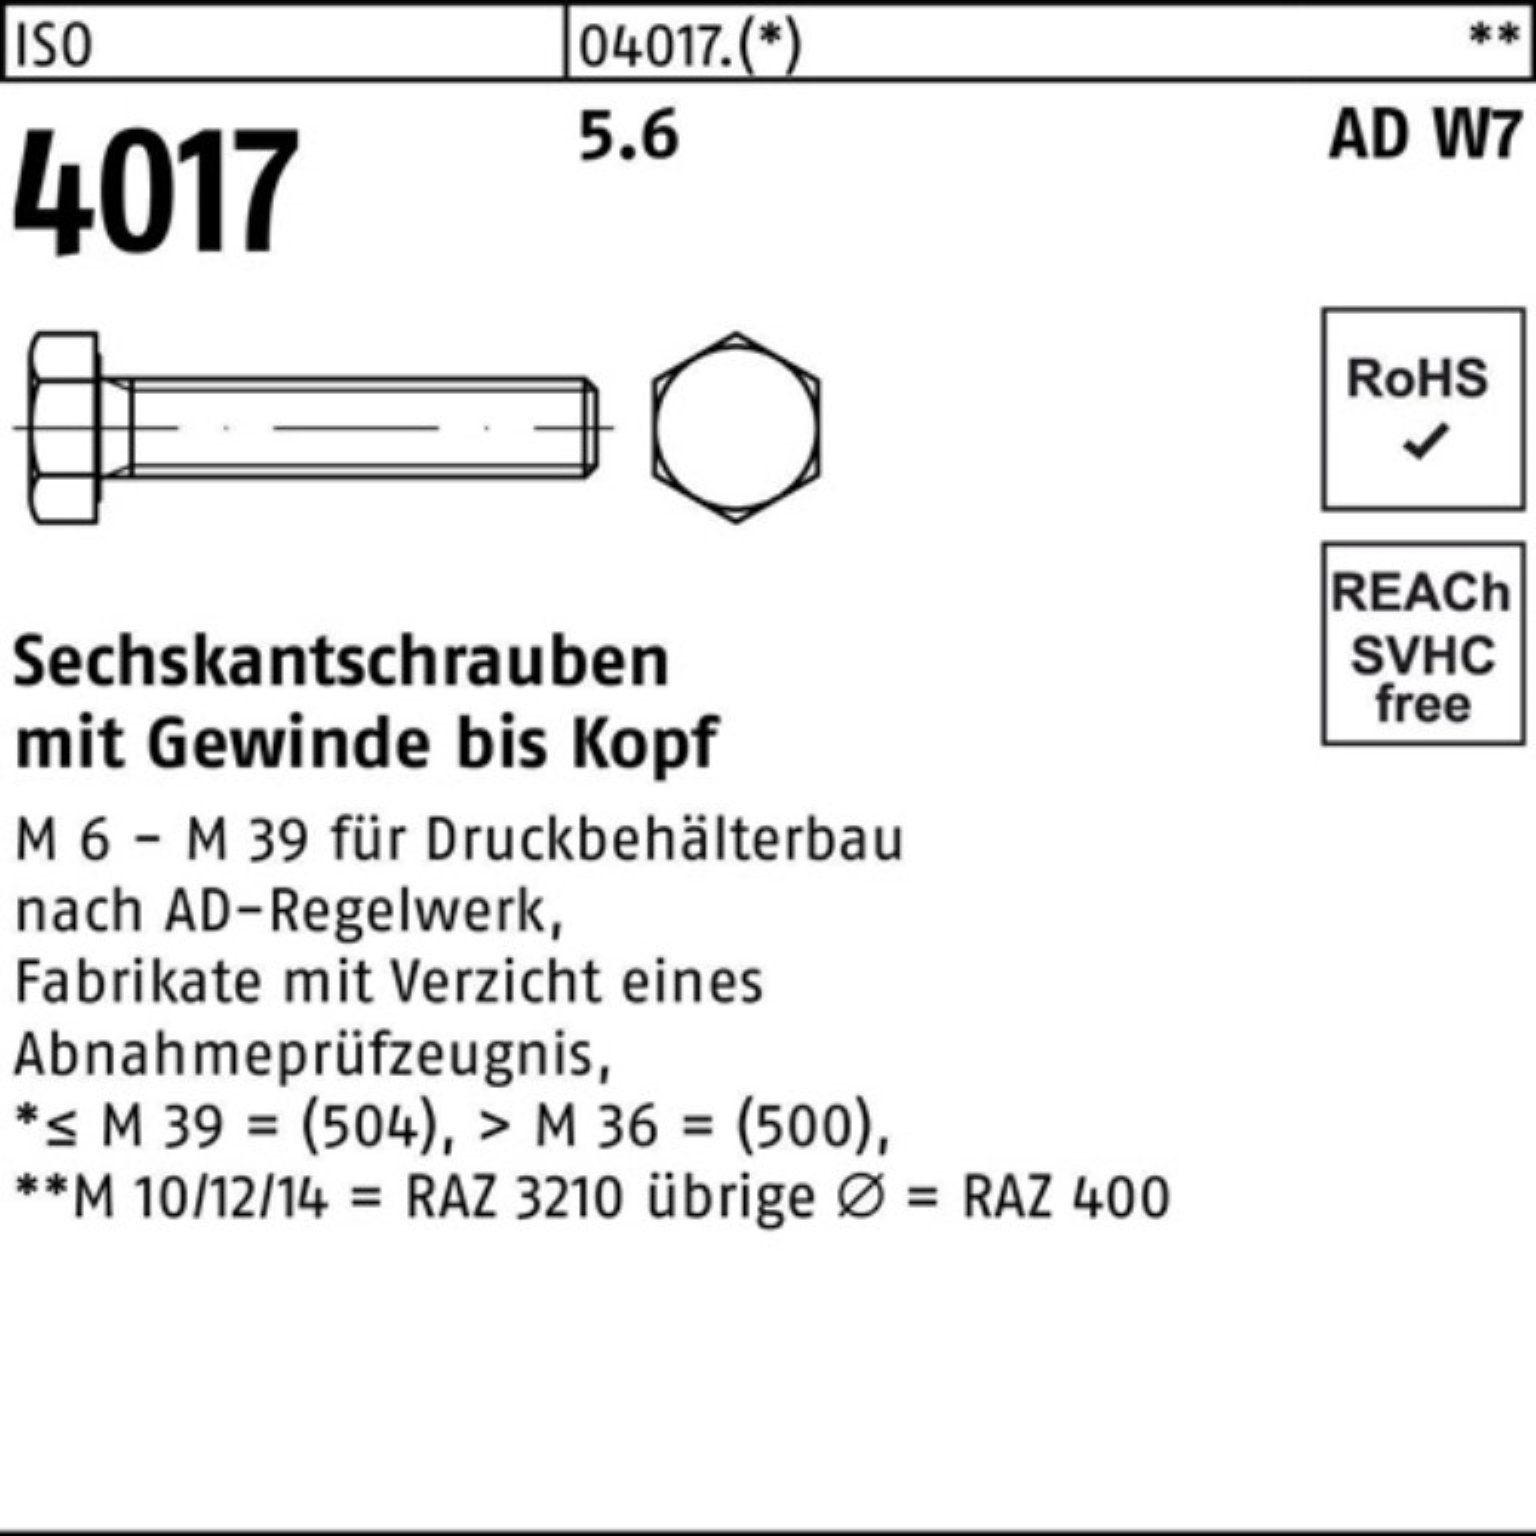 Bufab Sechskantschraube 200er Pack Sechskantschraube ISO 4017 VG M8x 16 5.6 AD W7 200 Stück I